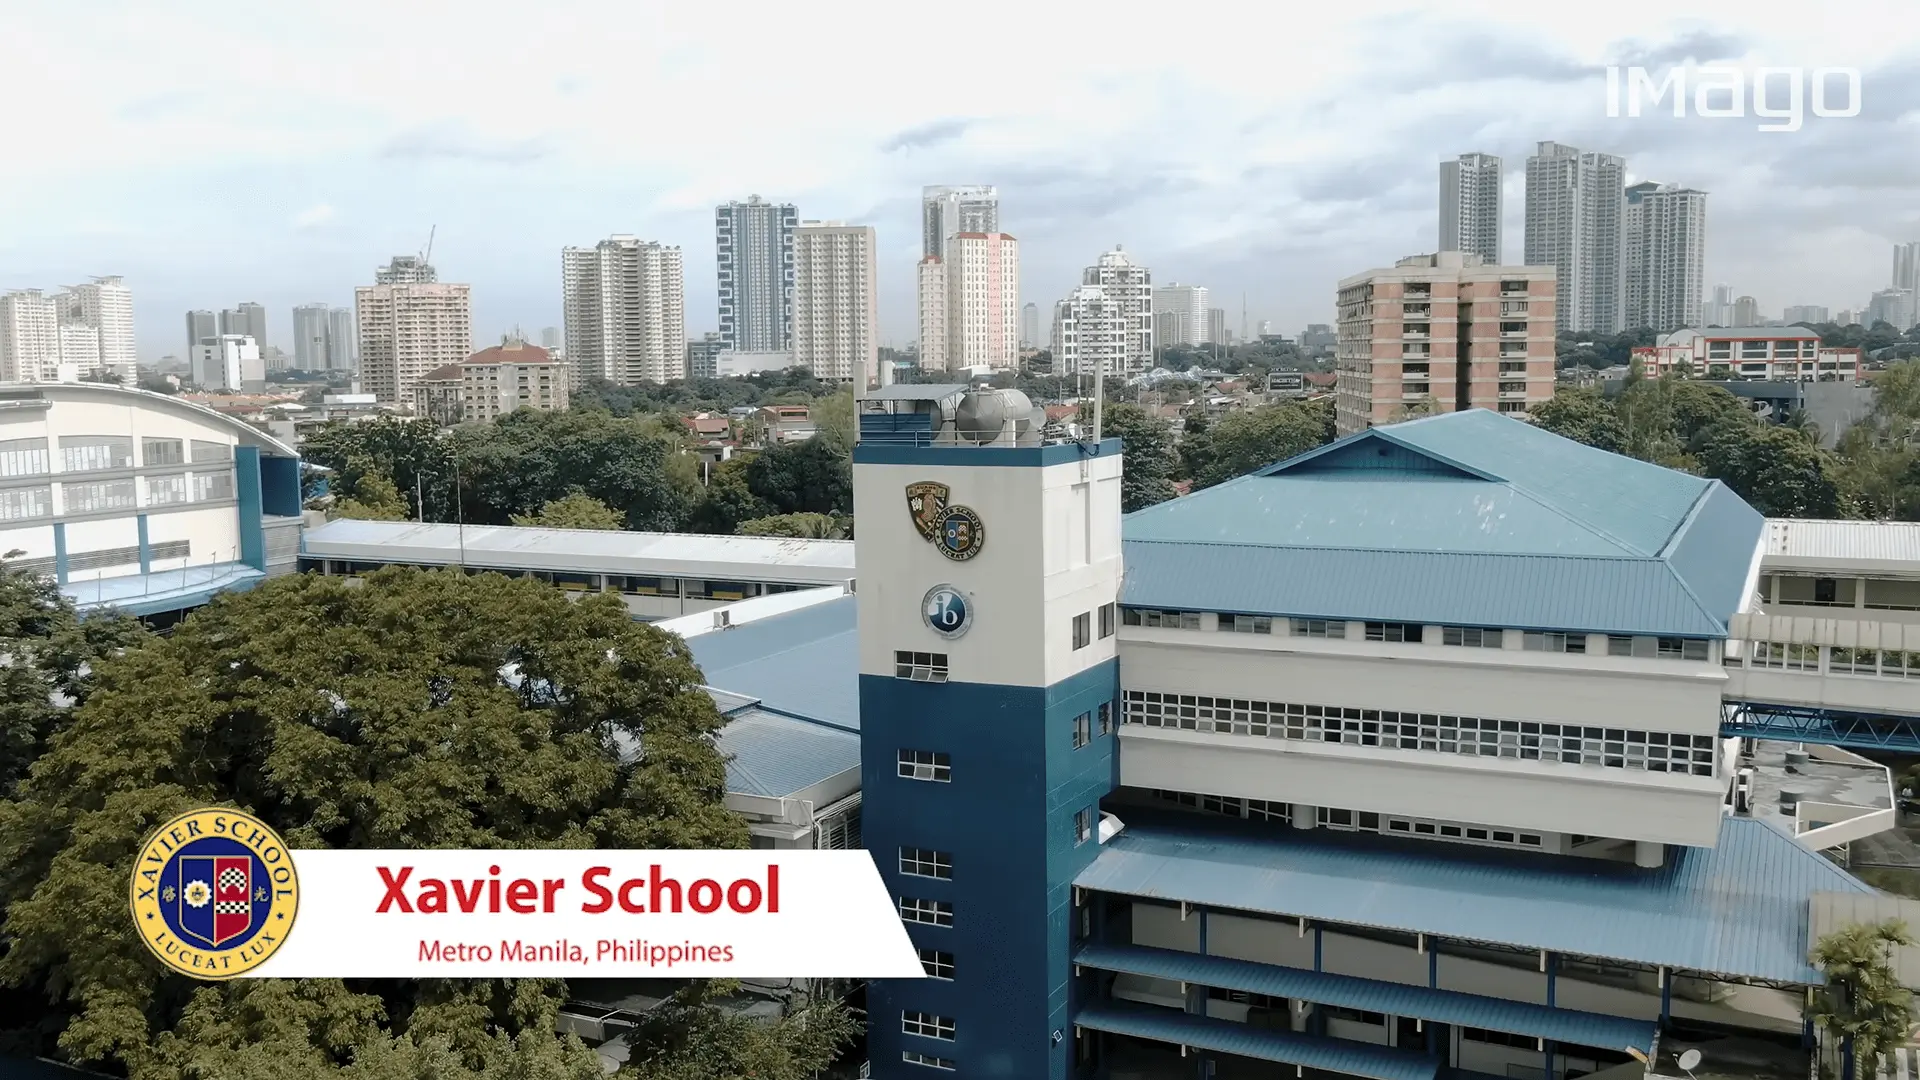 XAVIER SCHOOL